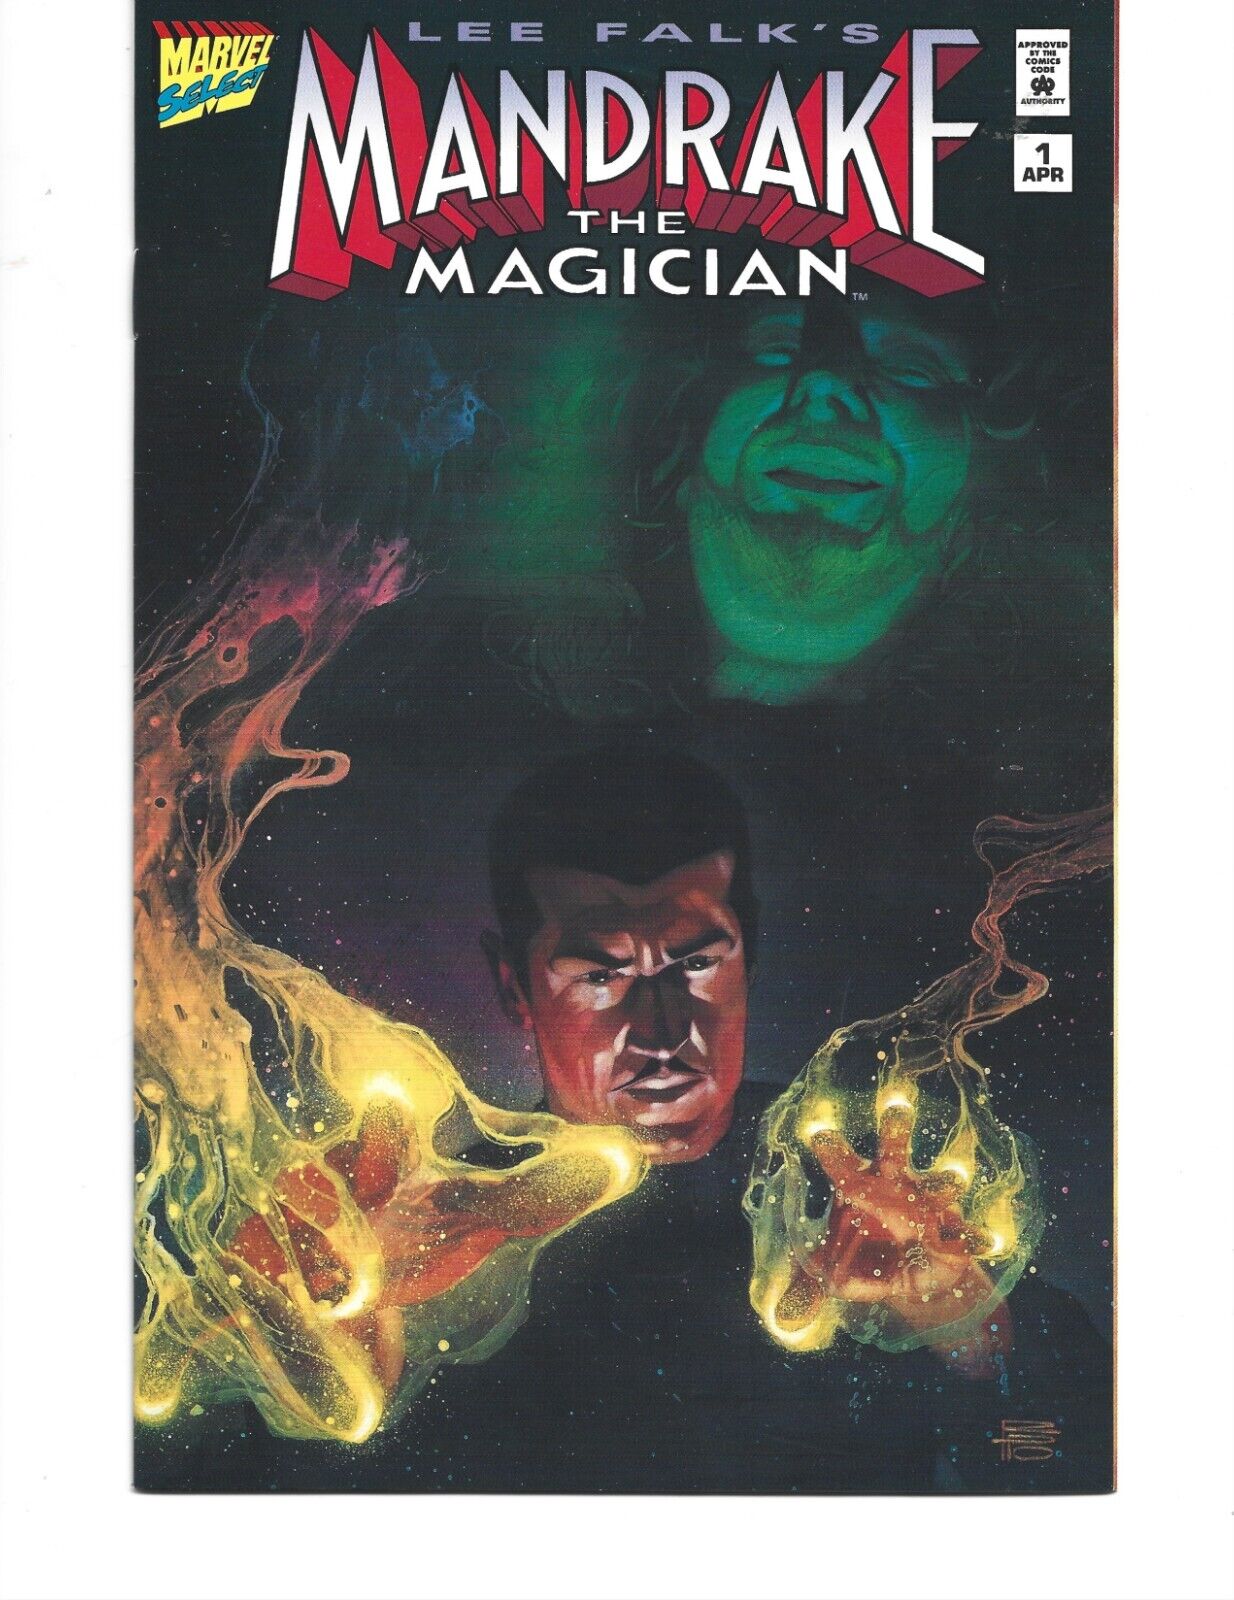 MANDRAKE THE MAGICIAN #1 AND #2  - 1995 - MARVEL - NEAR MINT